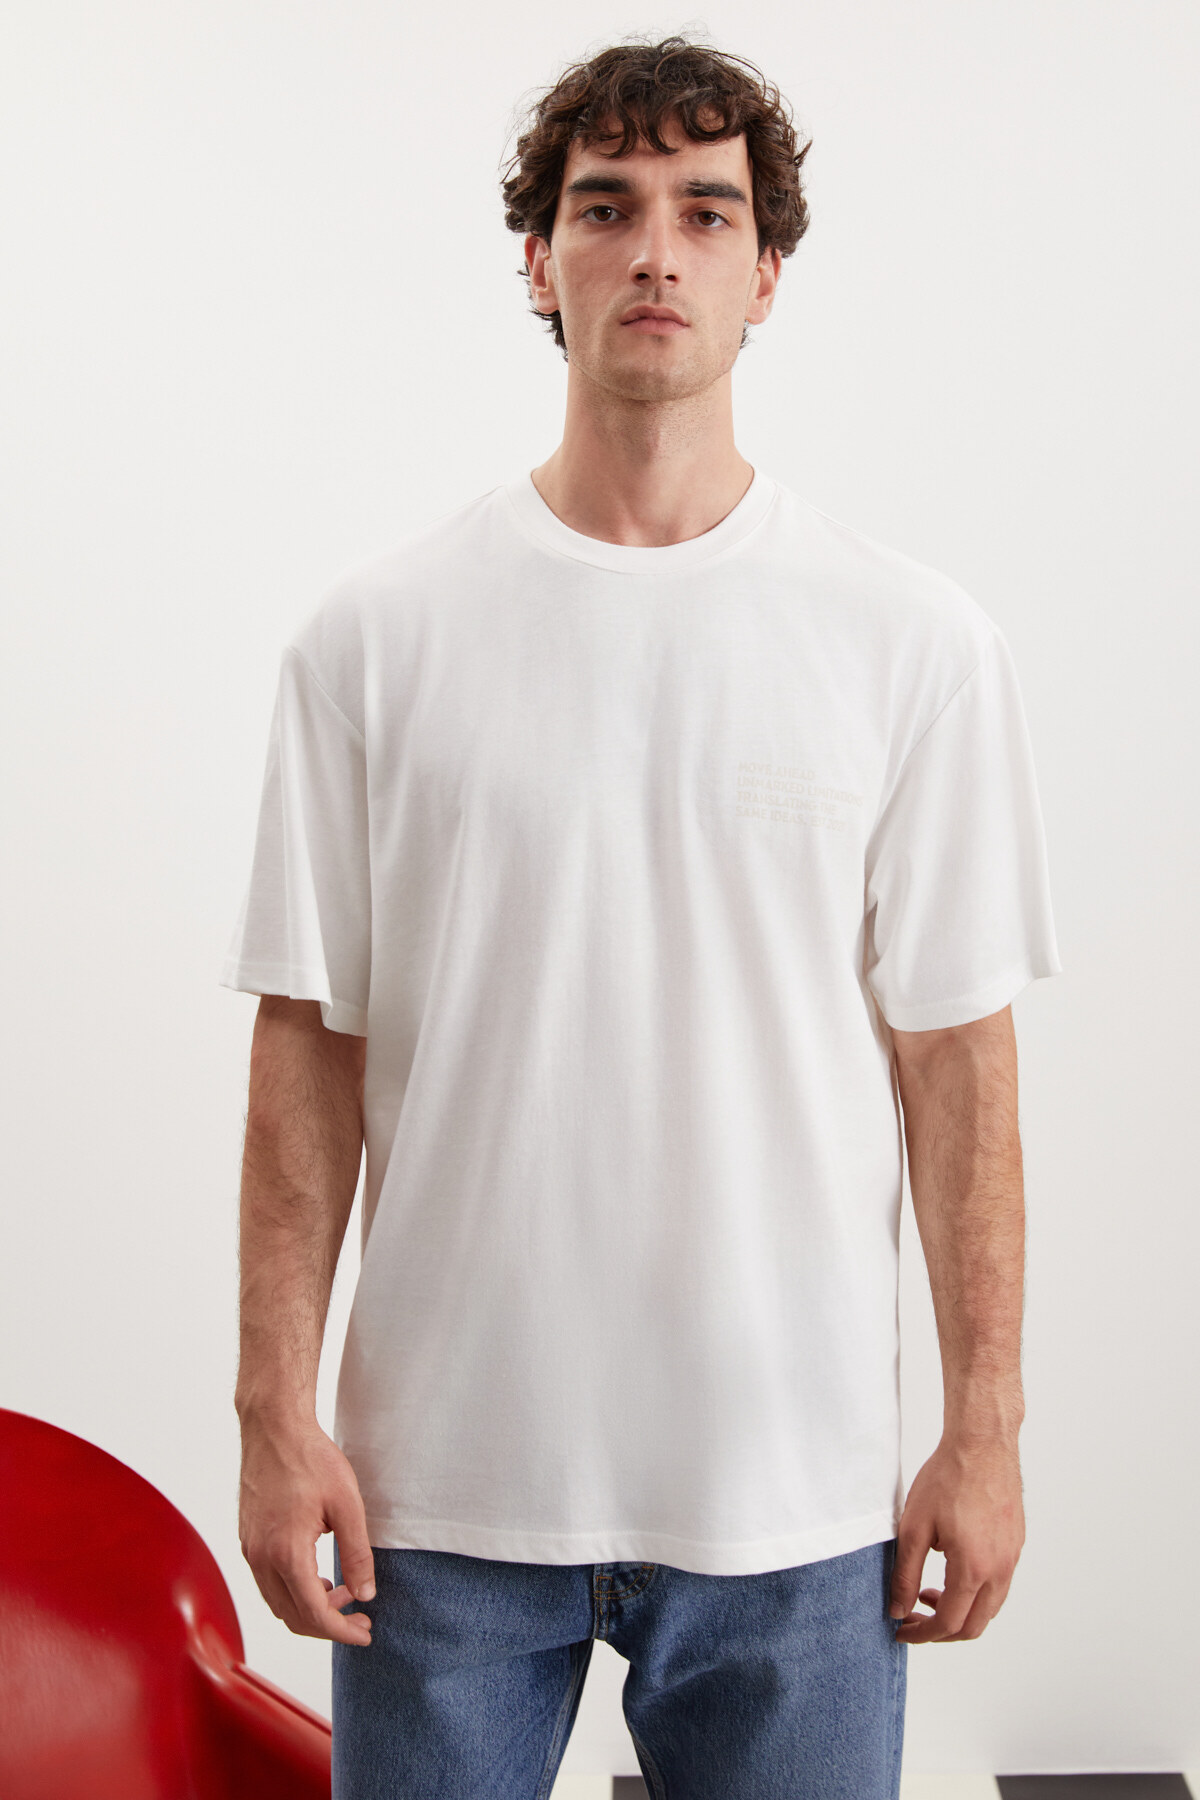 Levně GRIMELANGE Darell Men's Oversize Fit 100% Cotton Thick Textured Printed White T-shir